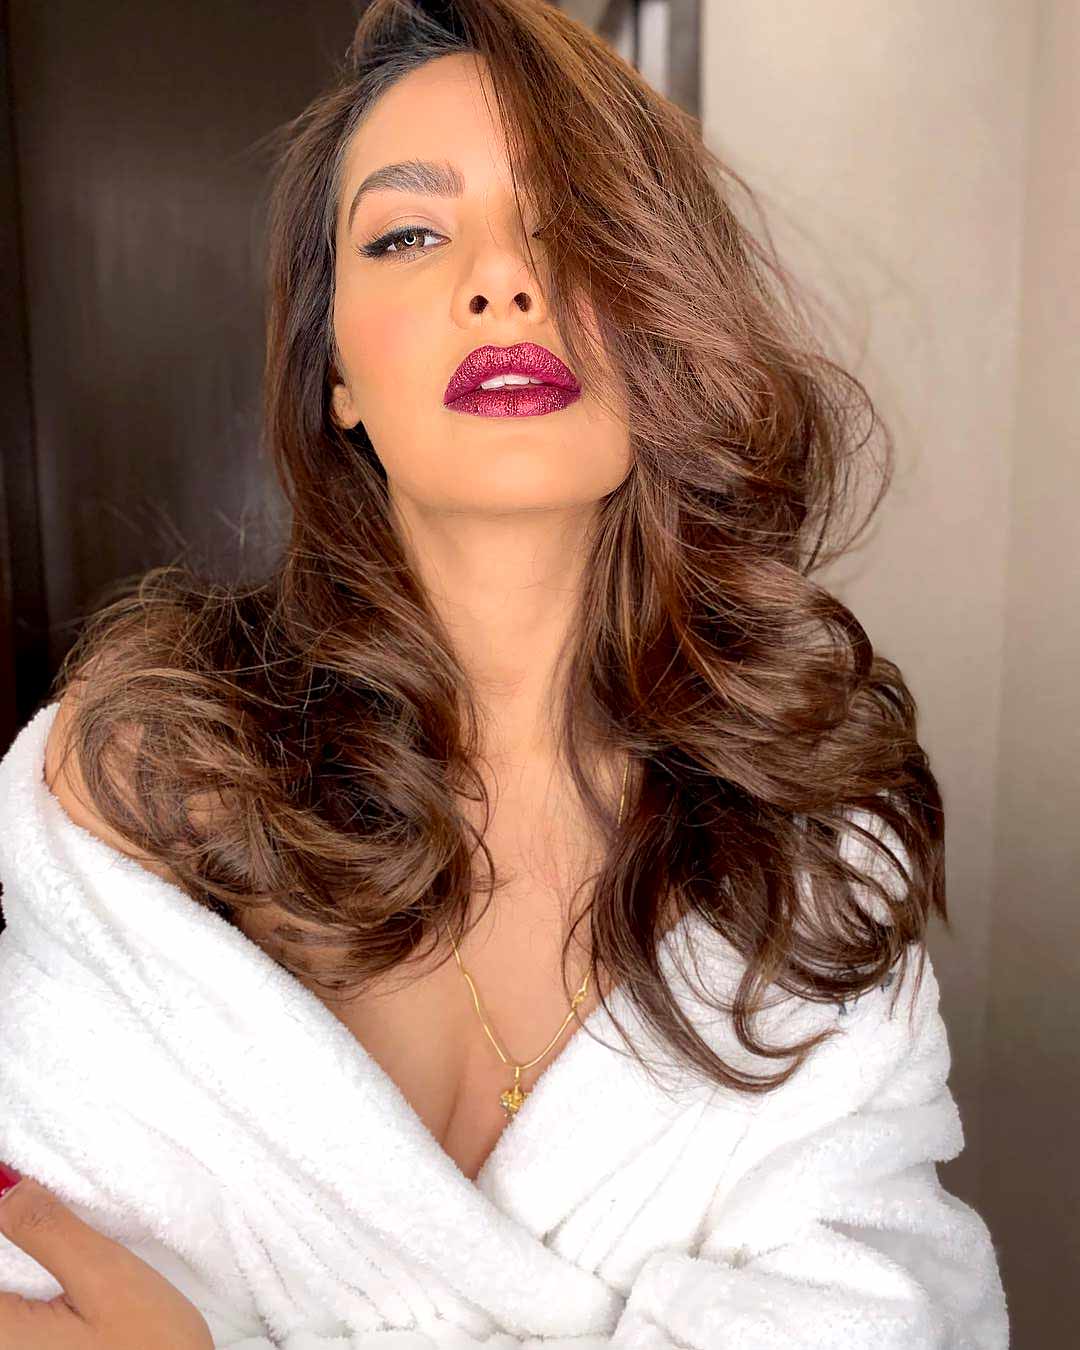 Esha Gupta rocks nude lips, green eye makeup - Rediff.com Get Ahead